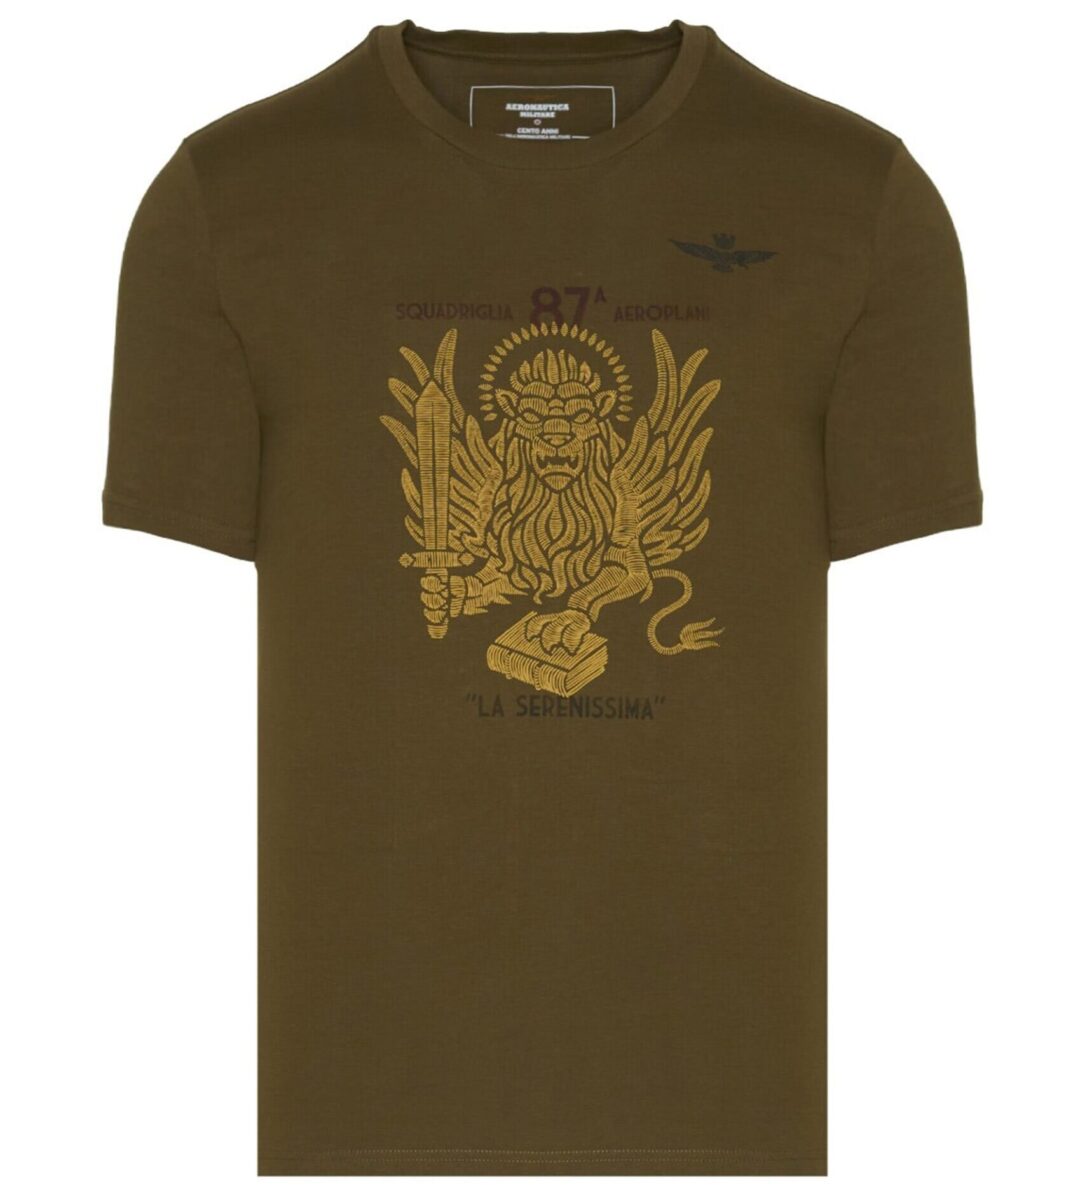 Aeronautica Militare - T-shirt - La Serenissima